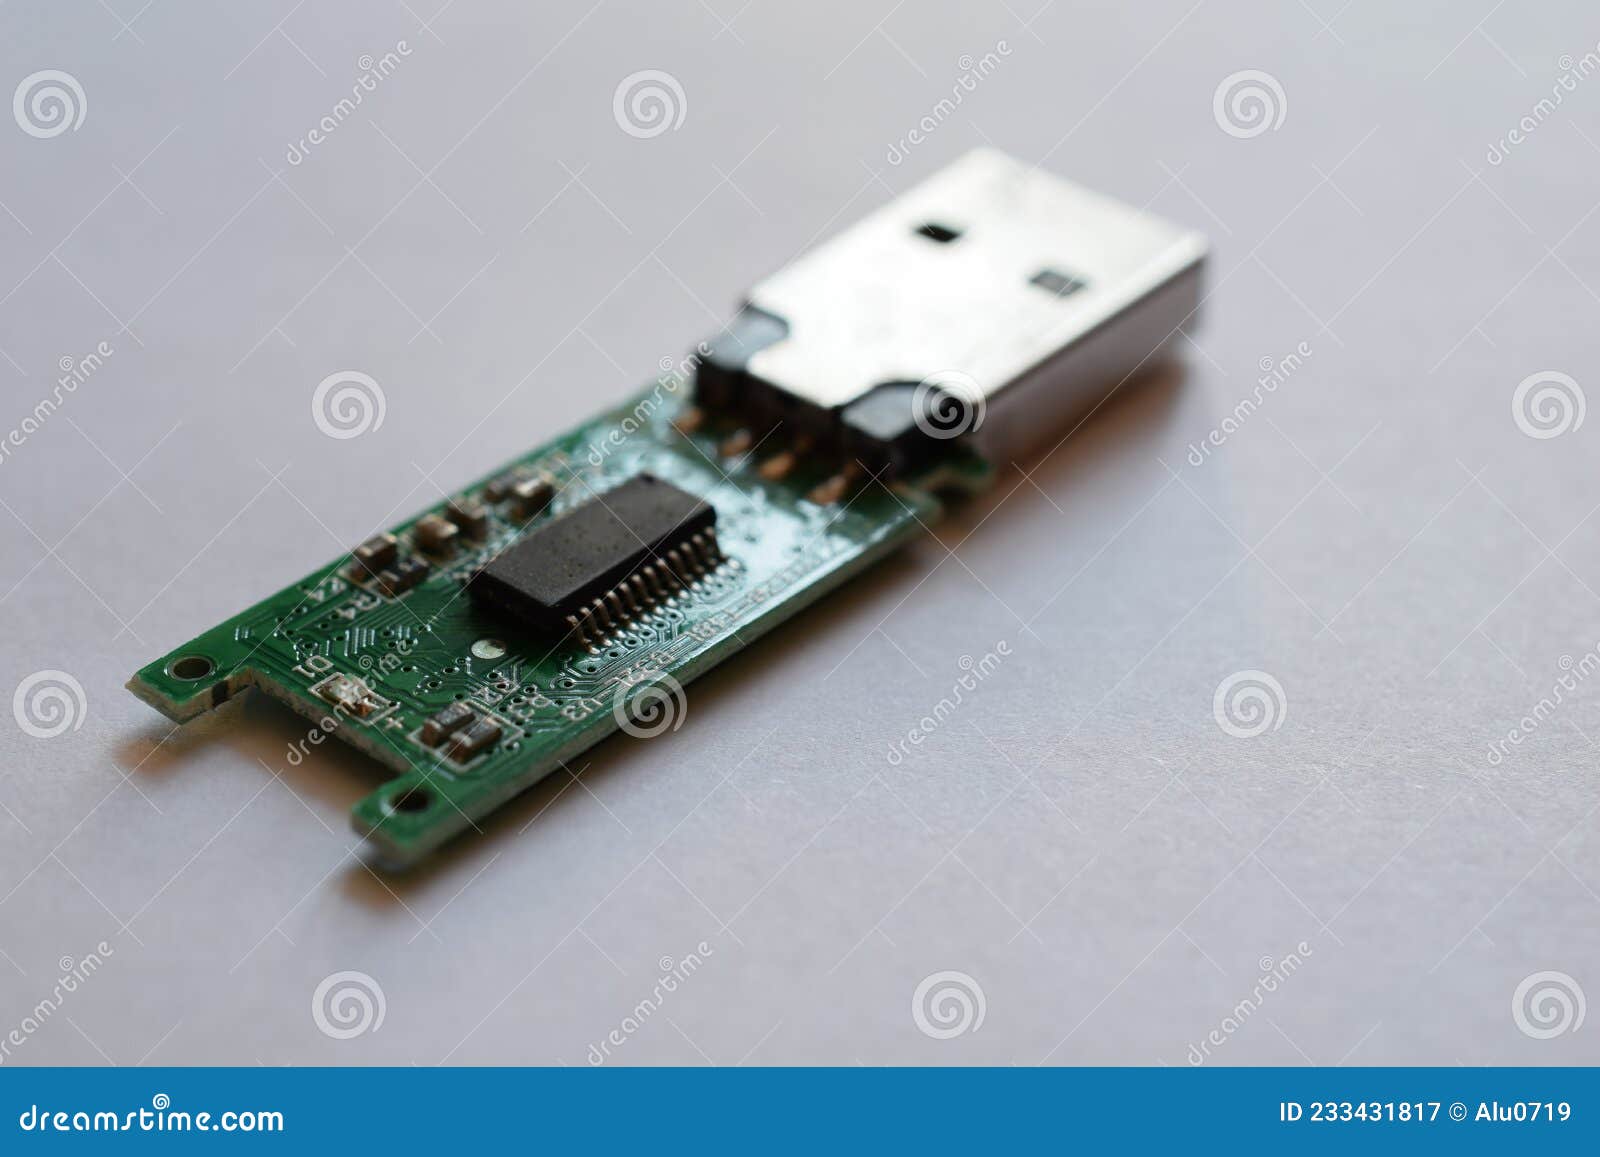 USB flash drive inside stock image. Image - 233431817